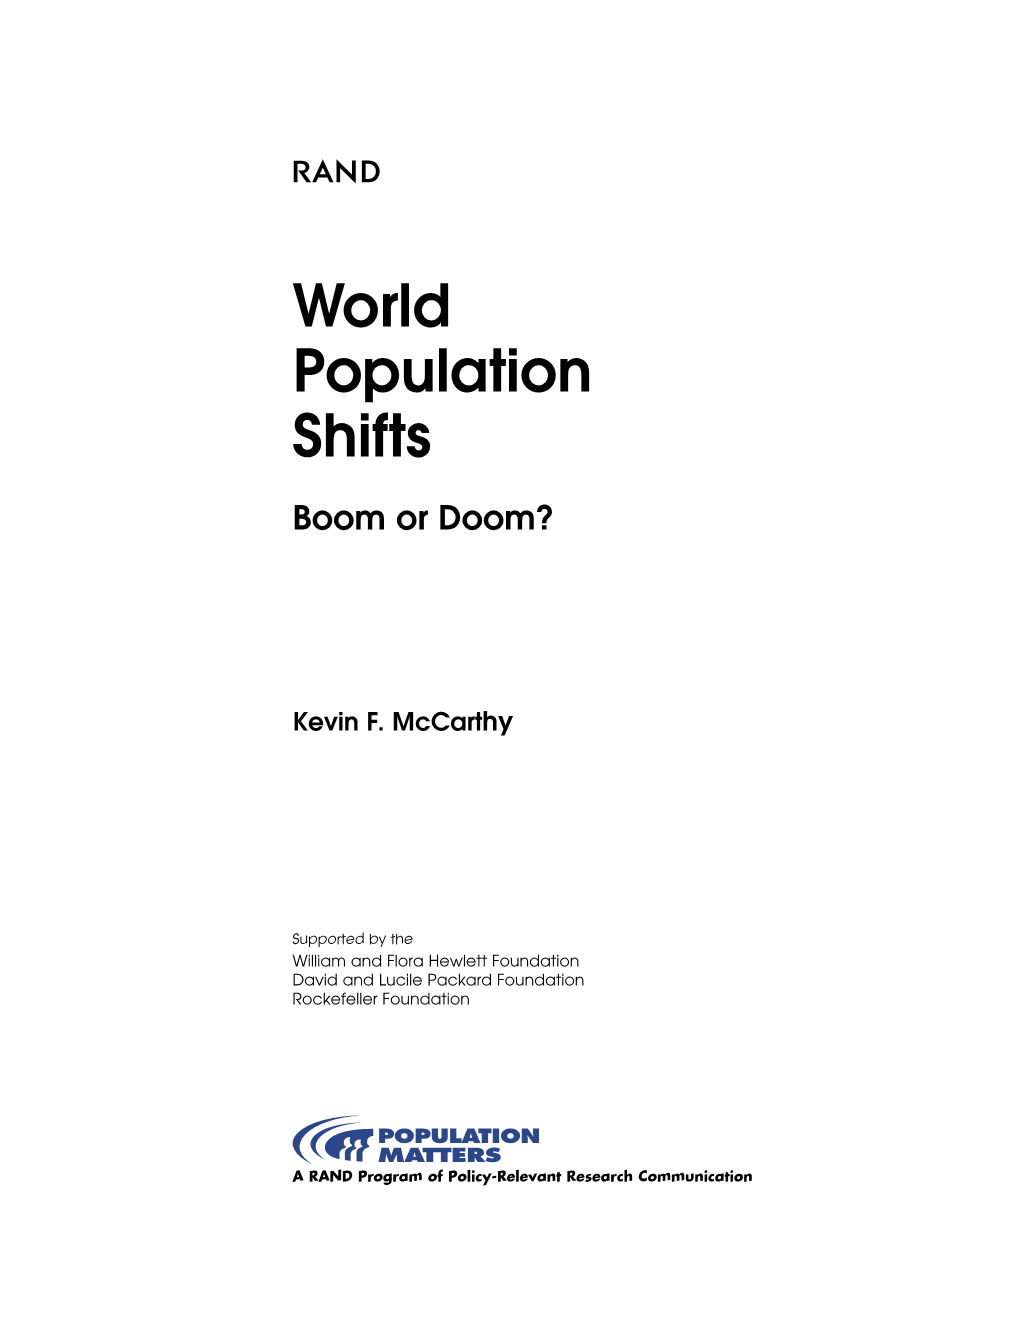 World Population Shifts: Boom Or Doom?